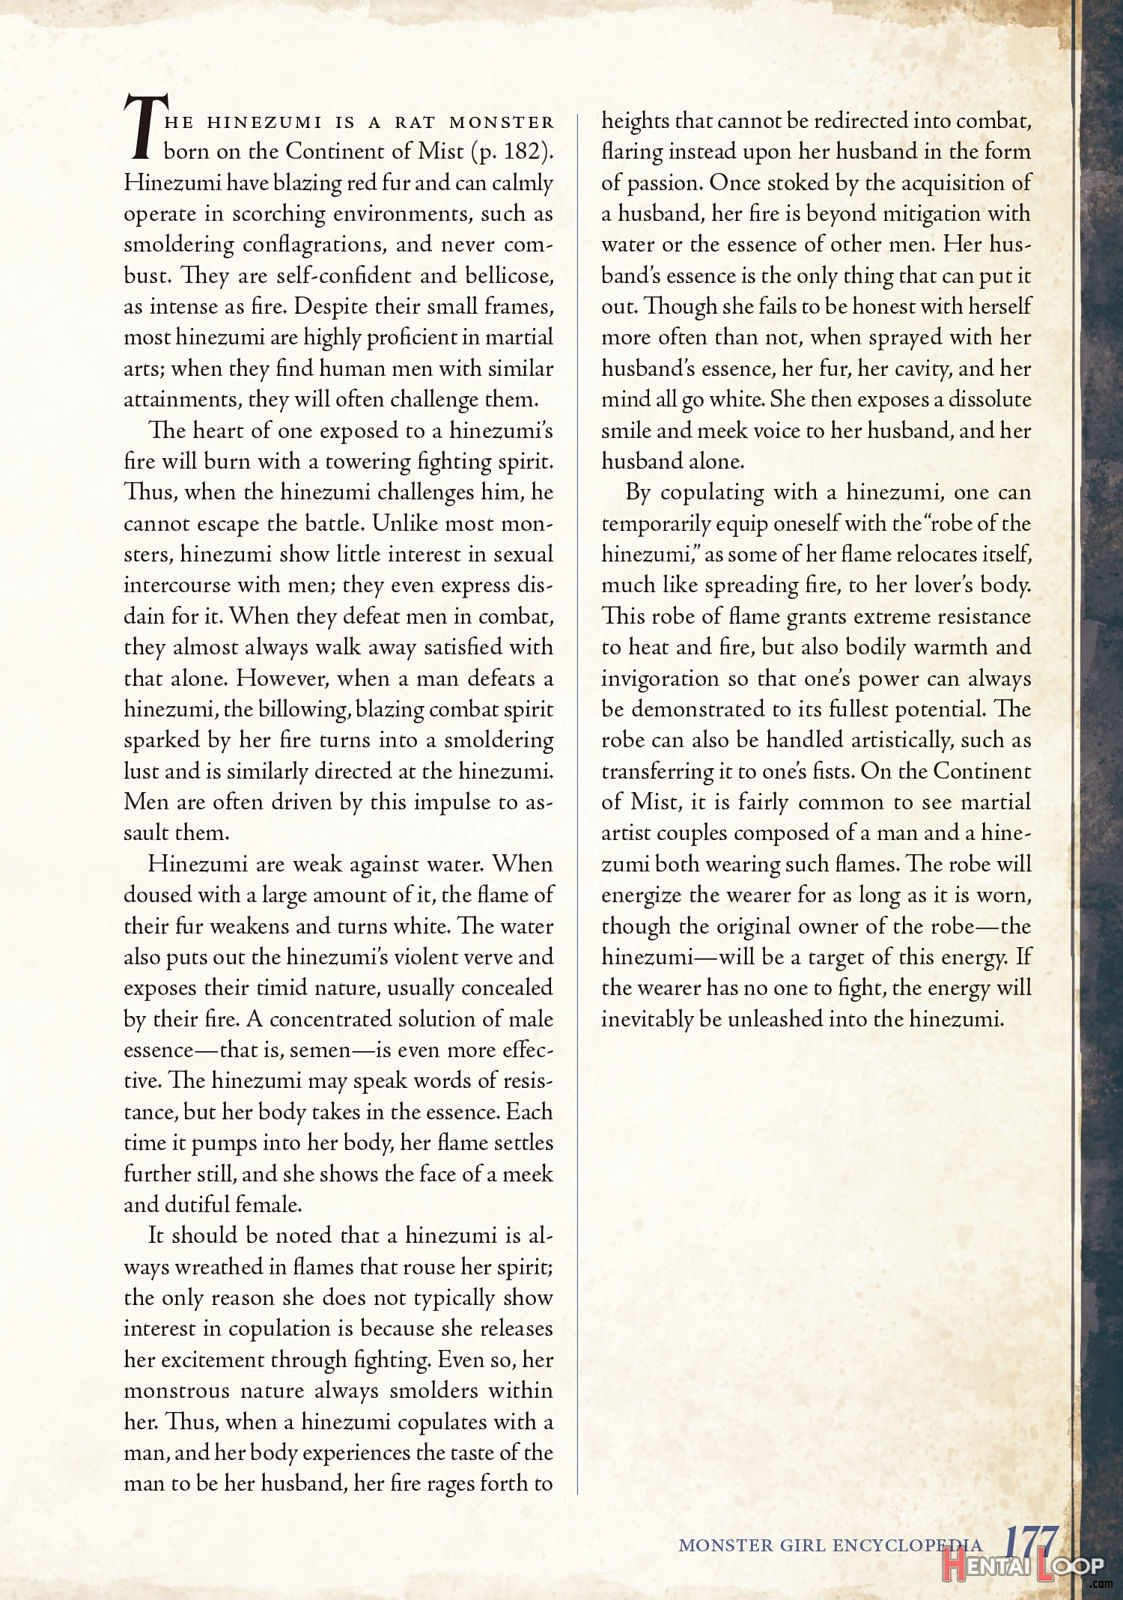 Monster Girl Encyclopedia Vol. 2 page 178